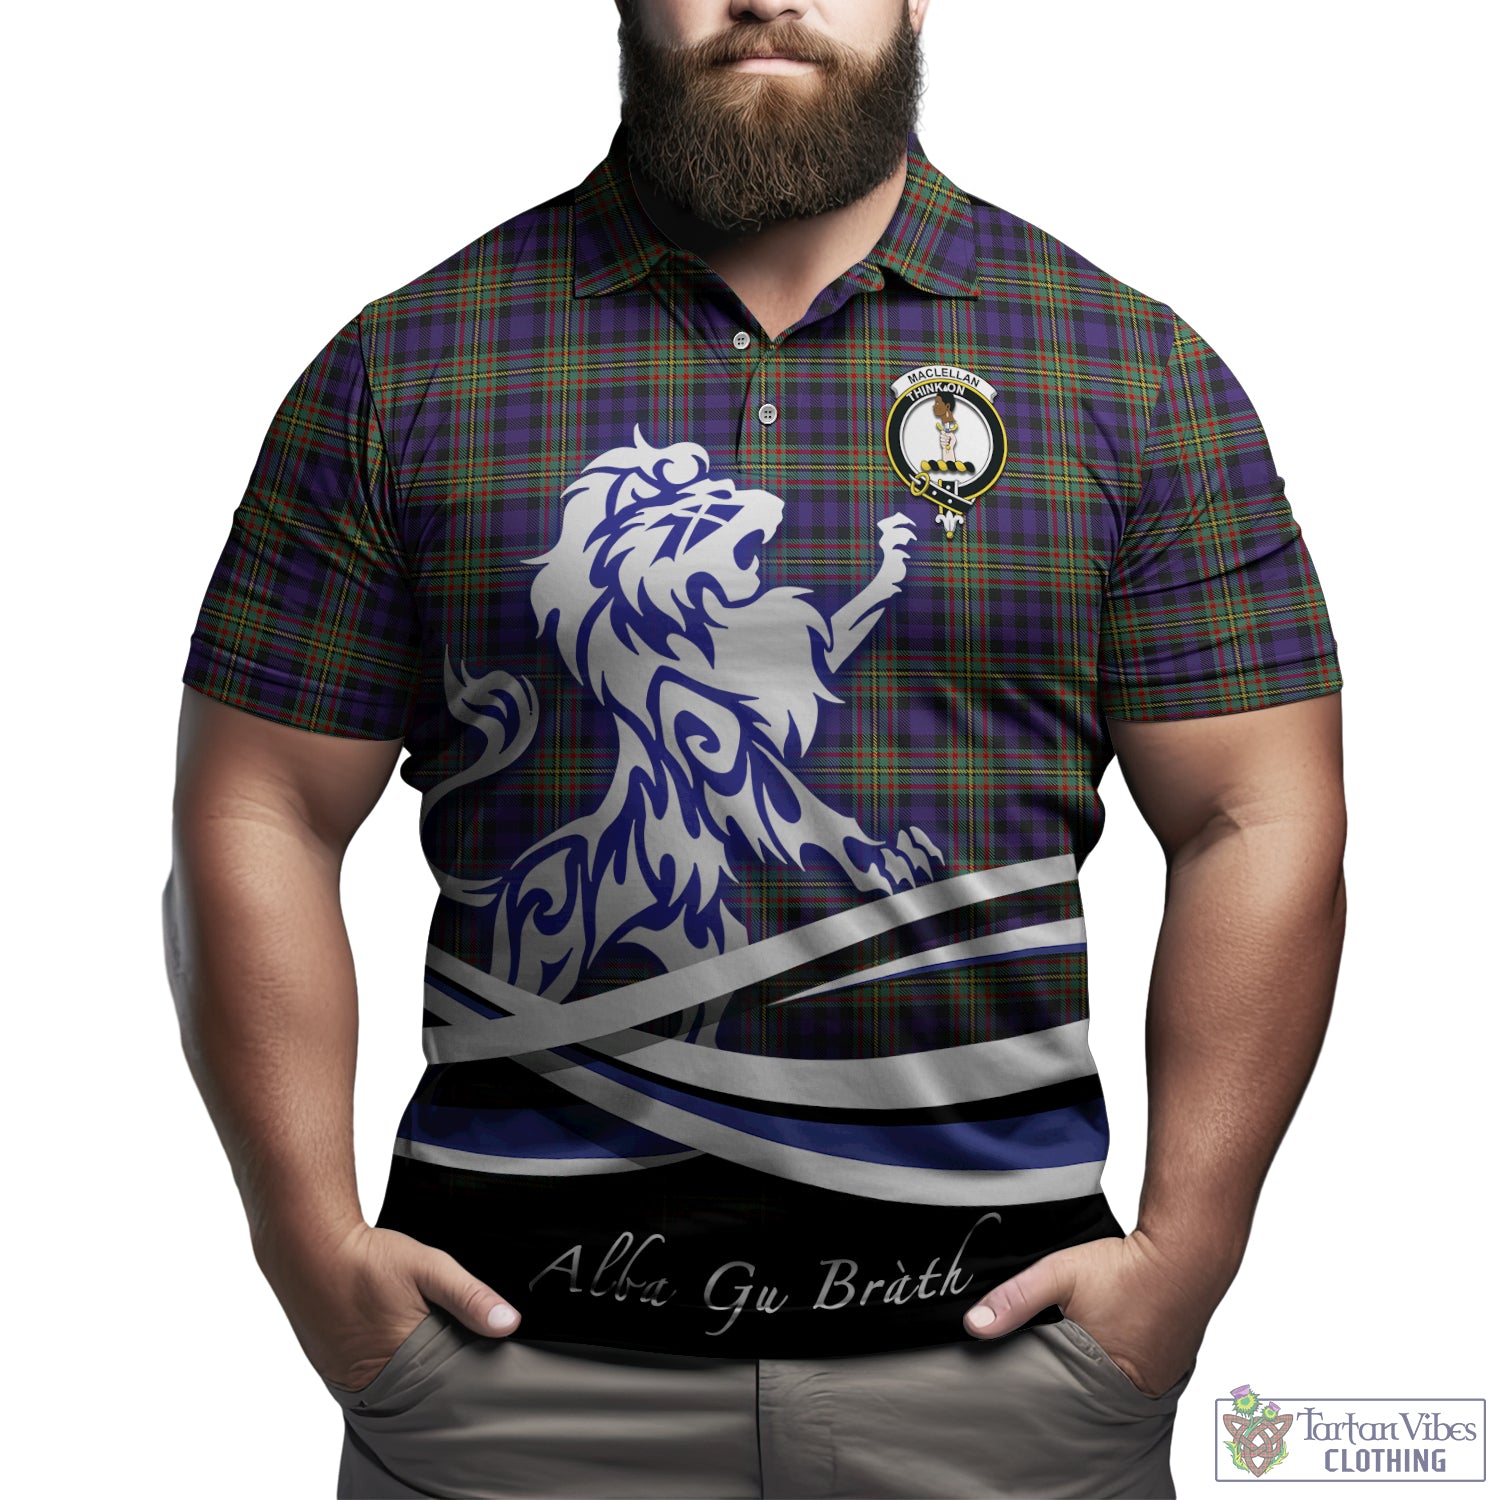 maclellan-tartan-polo-shirt-with-alba-gu-brath-regal-lion-emblem